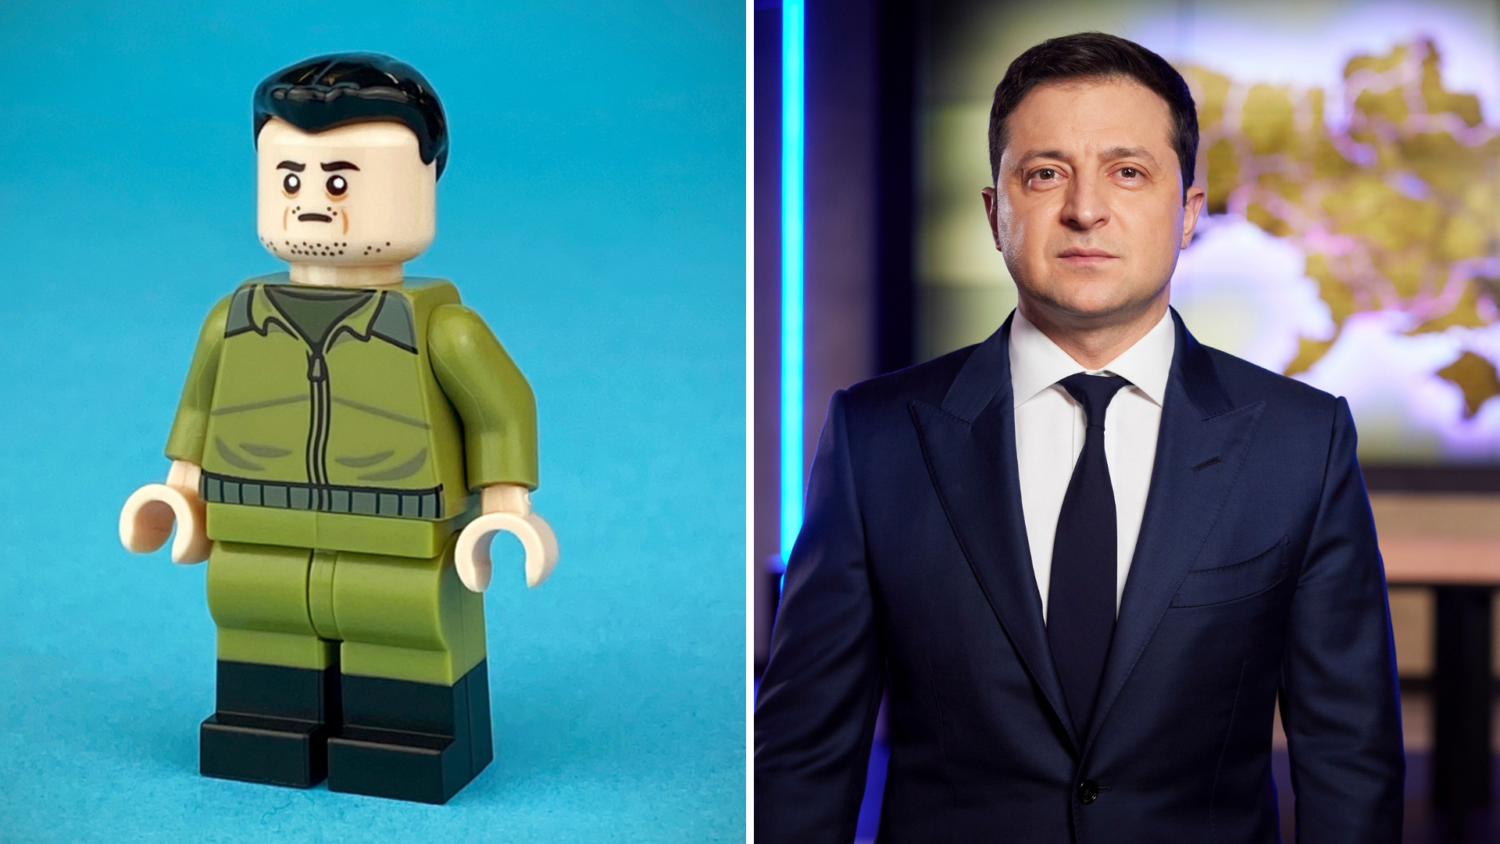 Lego figure of Ukrainian President Volodymyr Zelenskyy/portrait